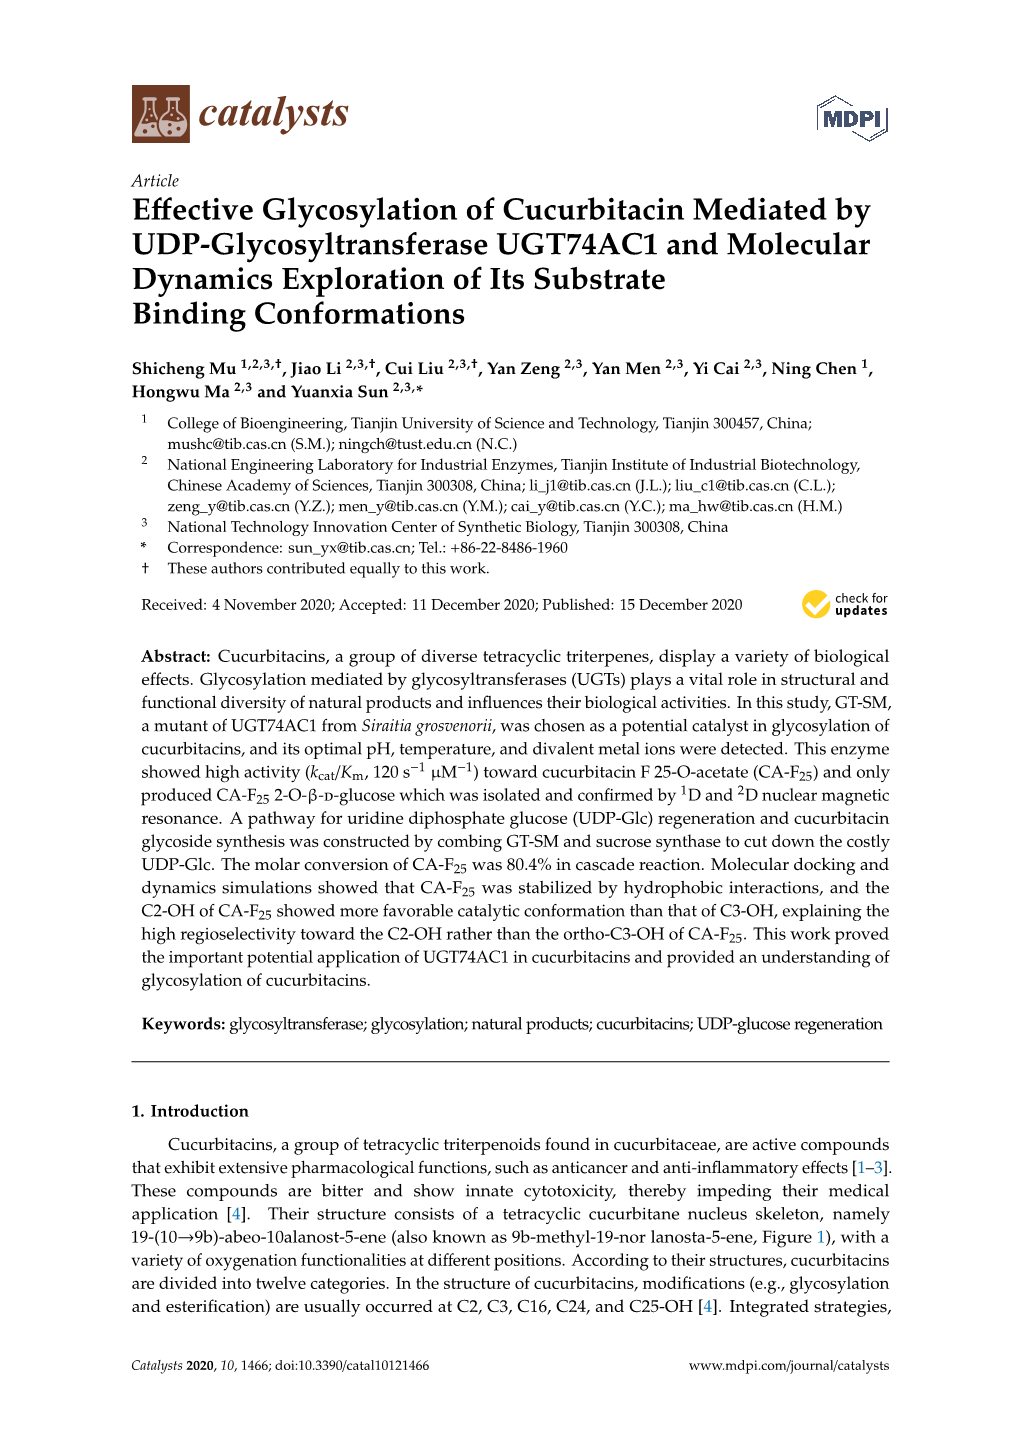 Effective Glycosylation of Cucurbitacin Mediated by UDP